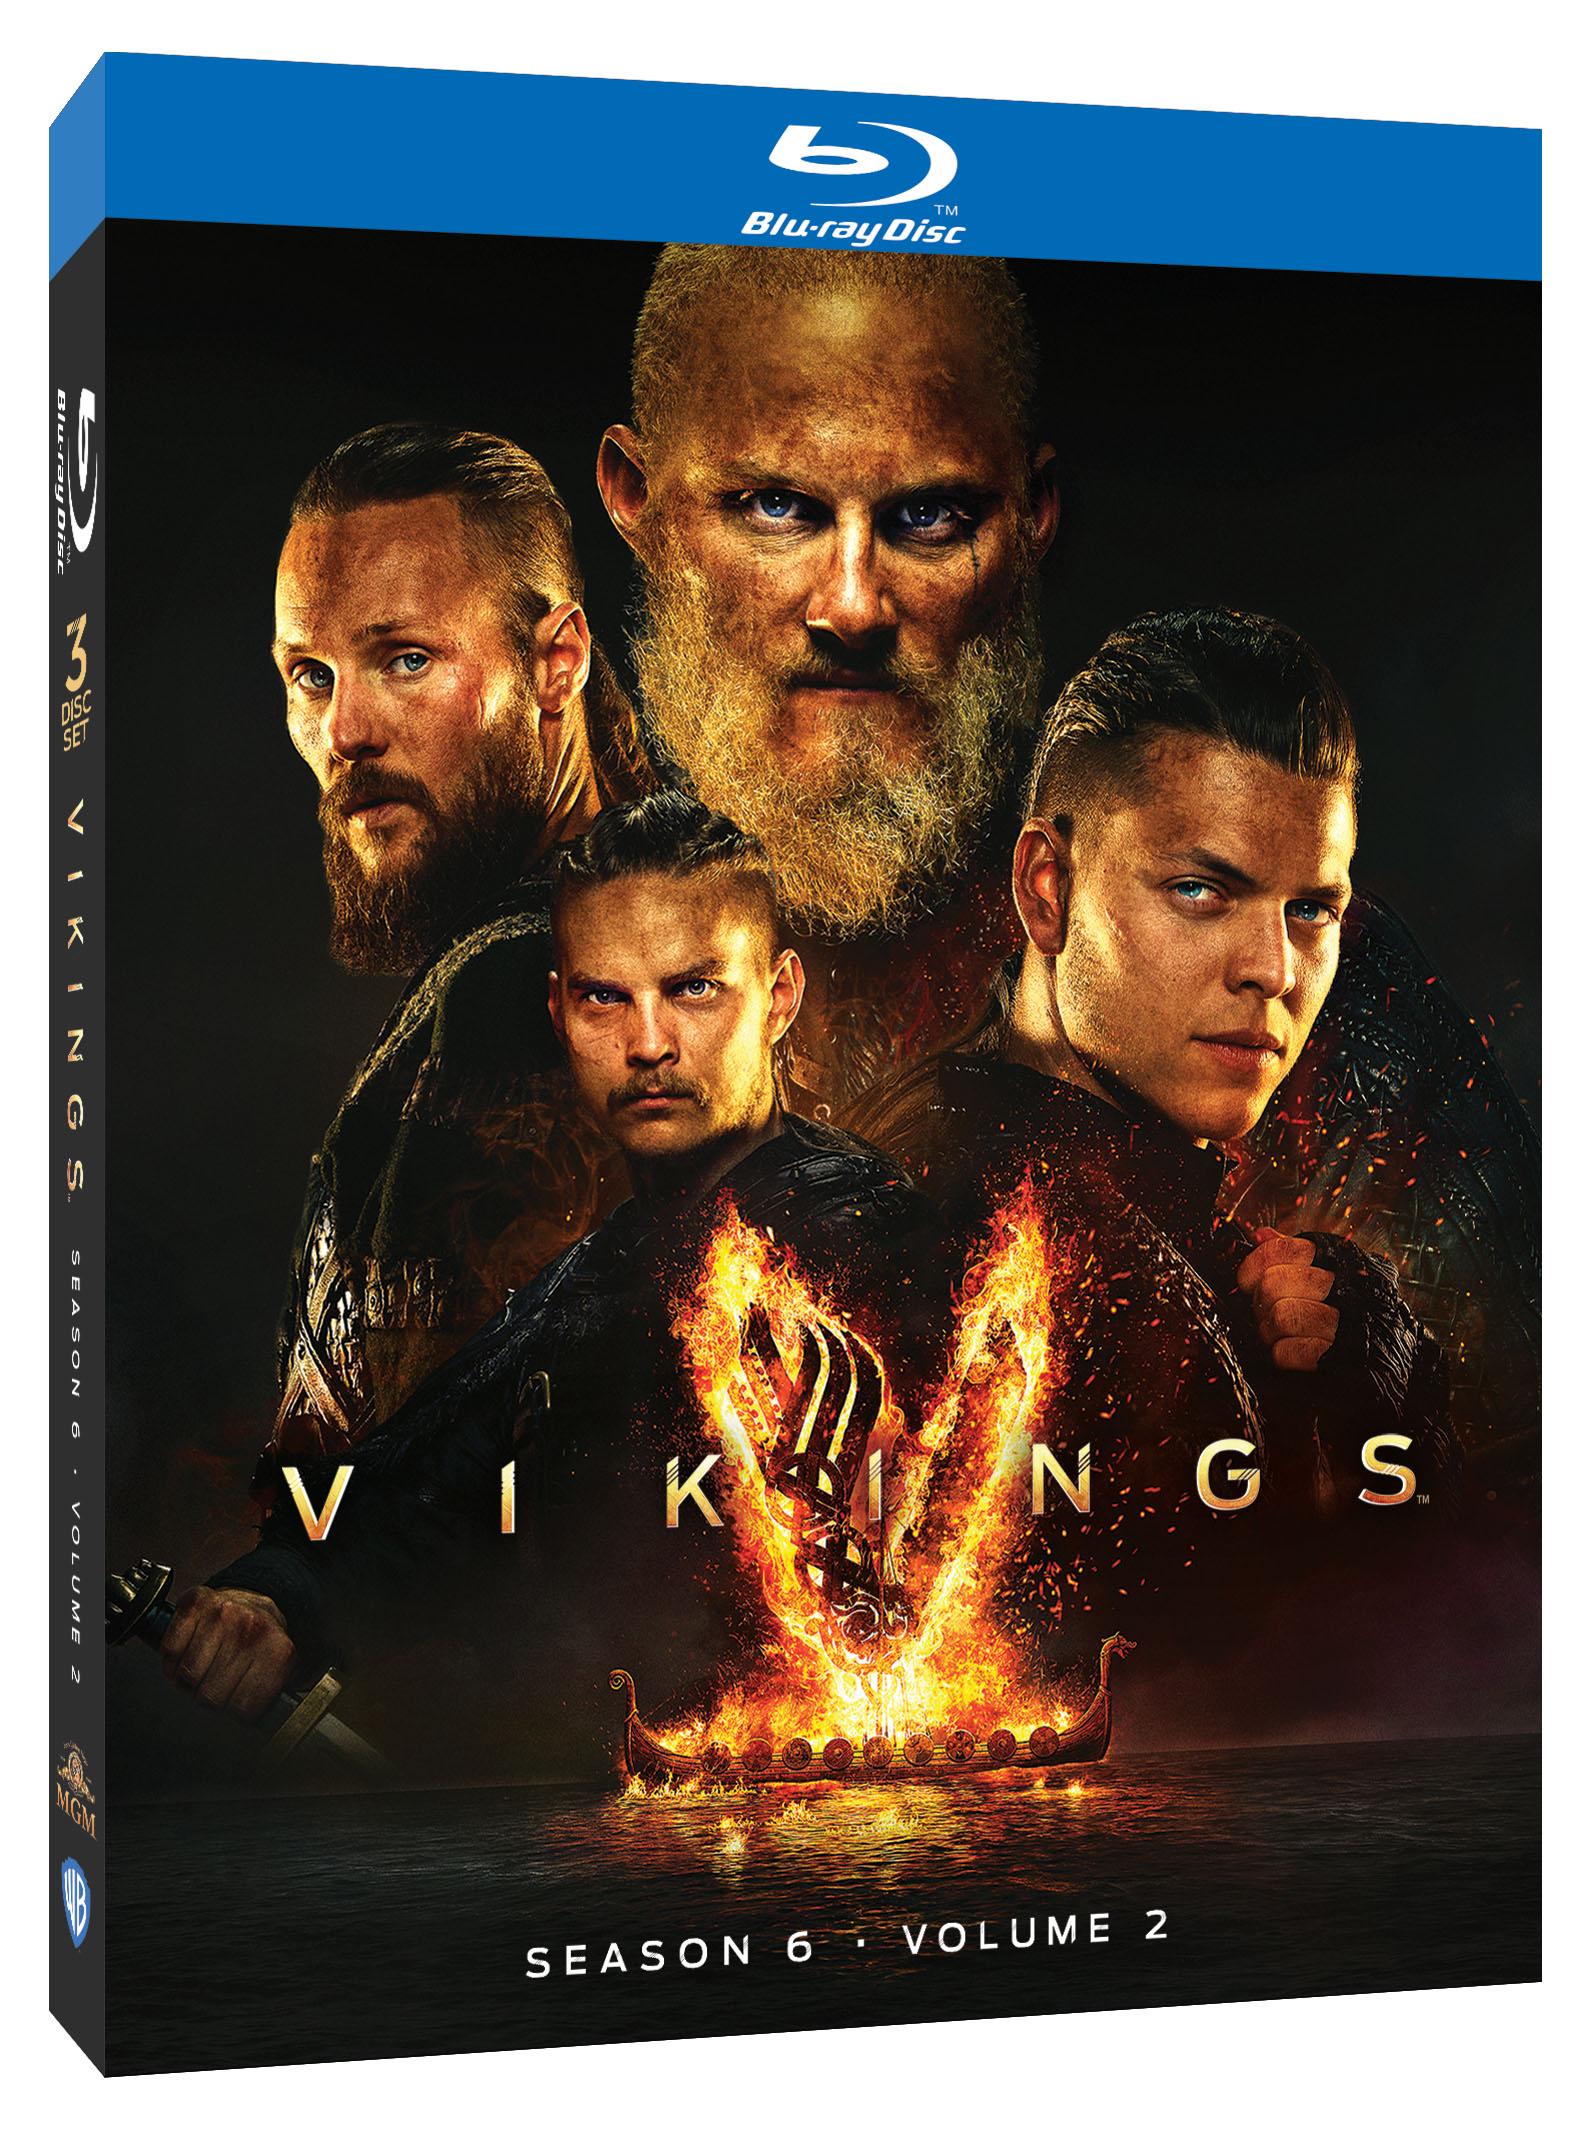 Vikings S6 Vol 2 BD Boxart1